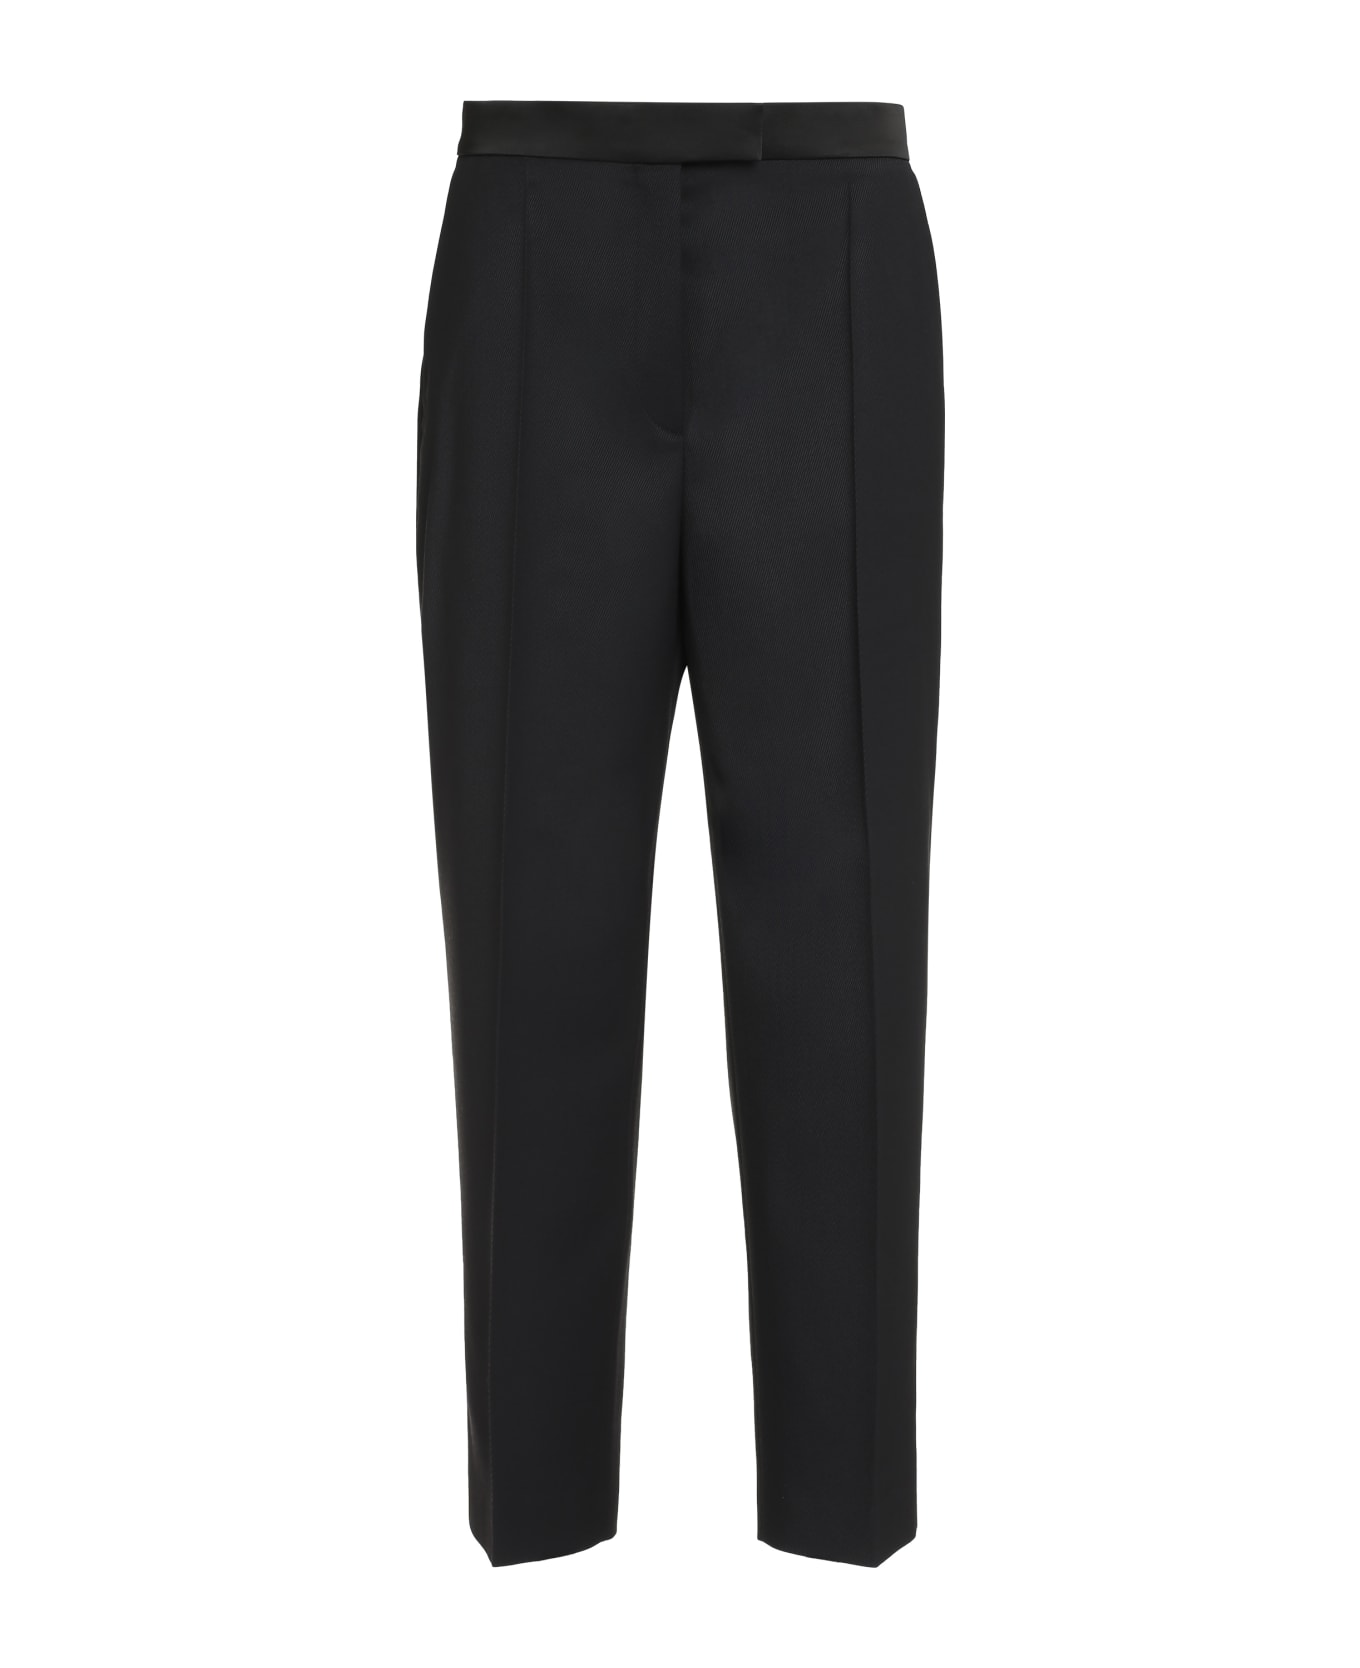 Hugo Boss Tatuxa Tailored Trousers - black